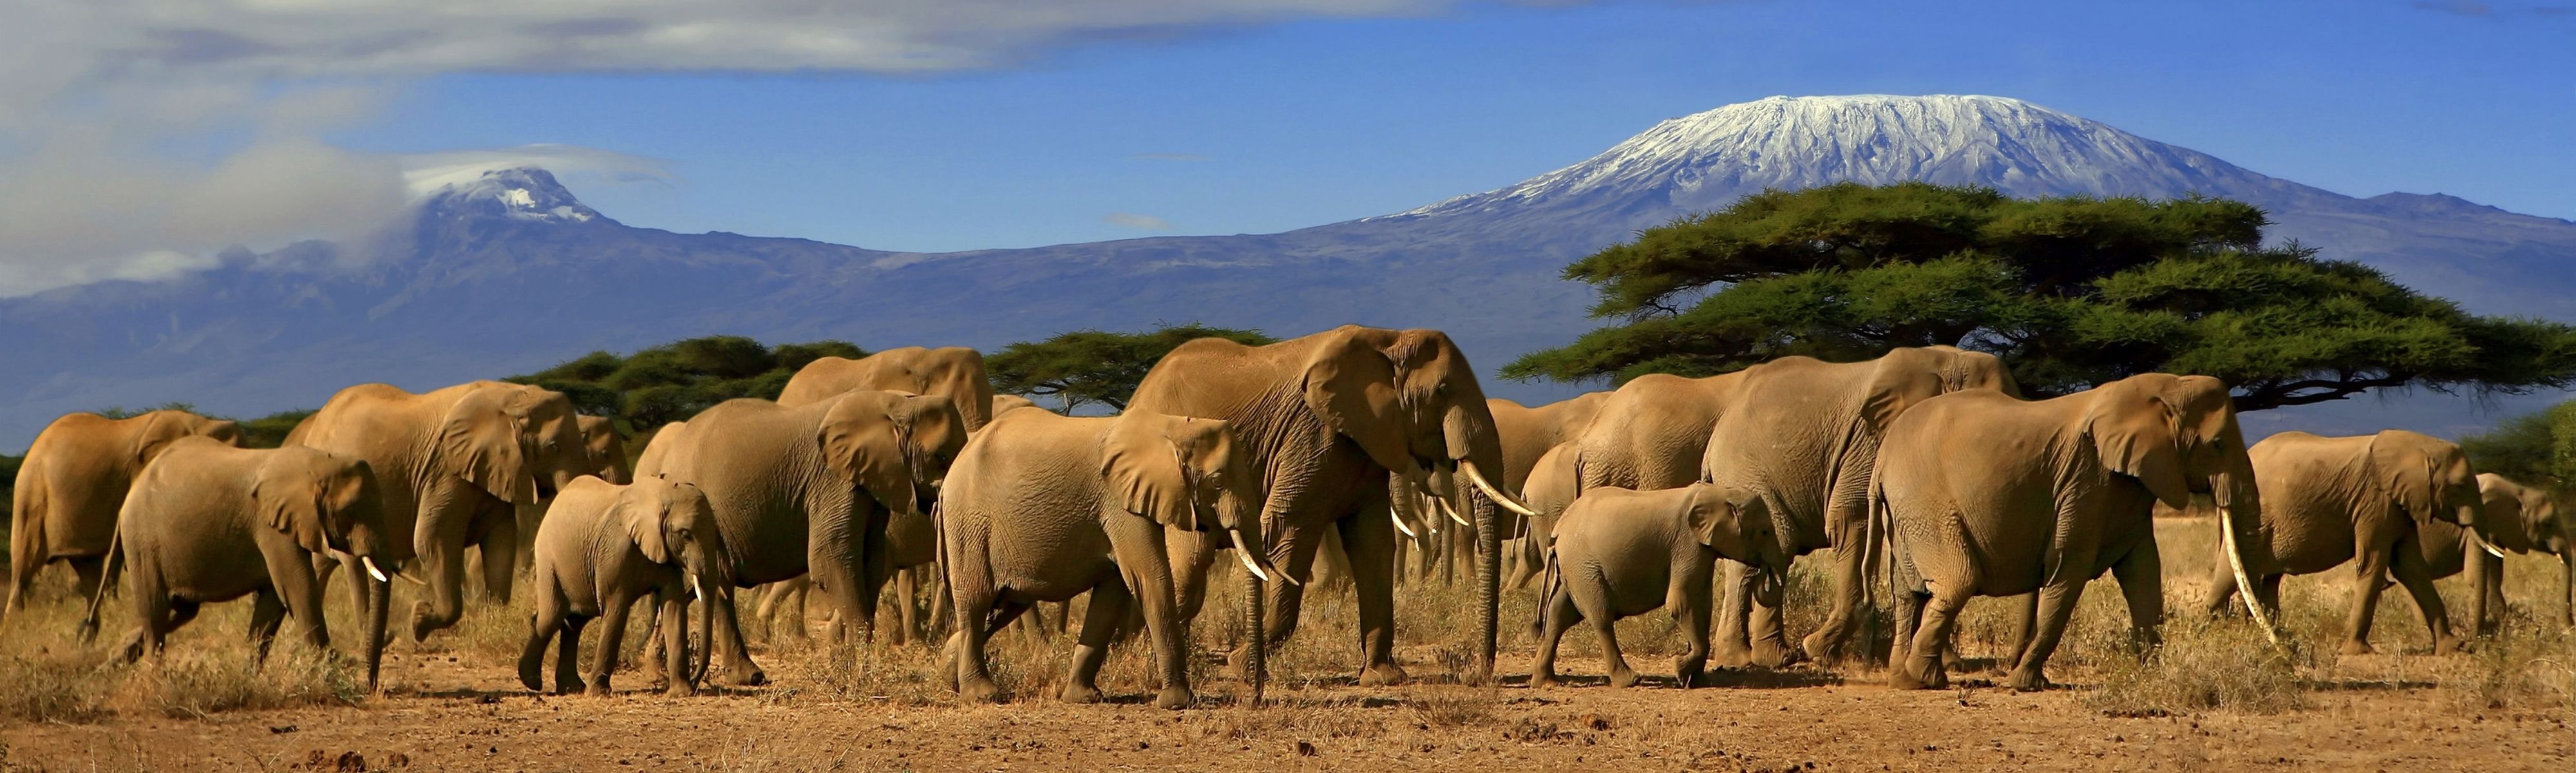 heards of elephants walking in tarangire national park